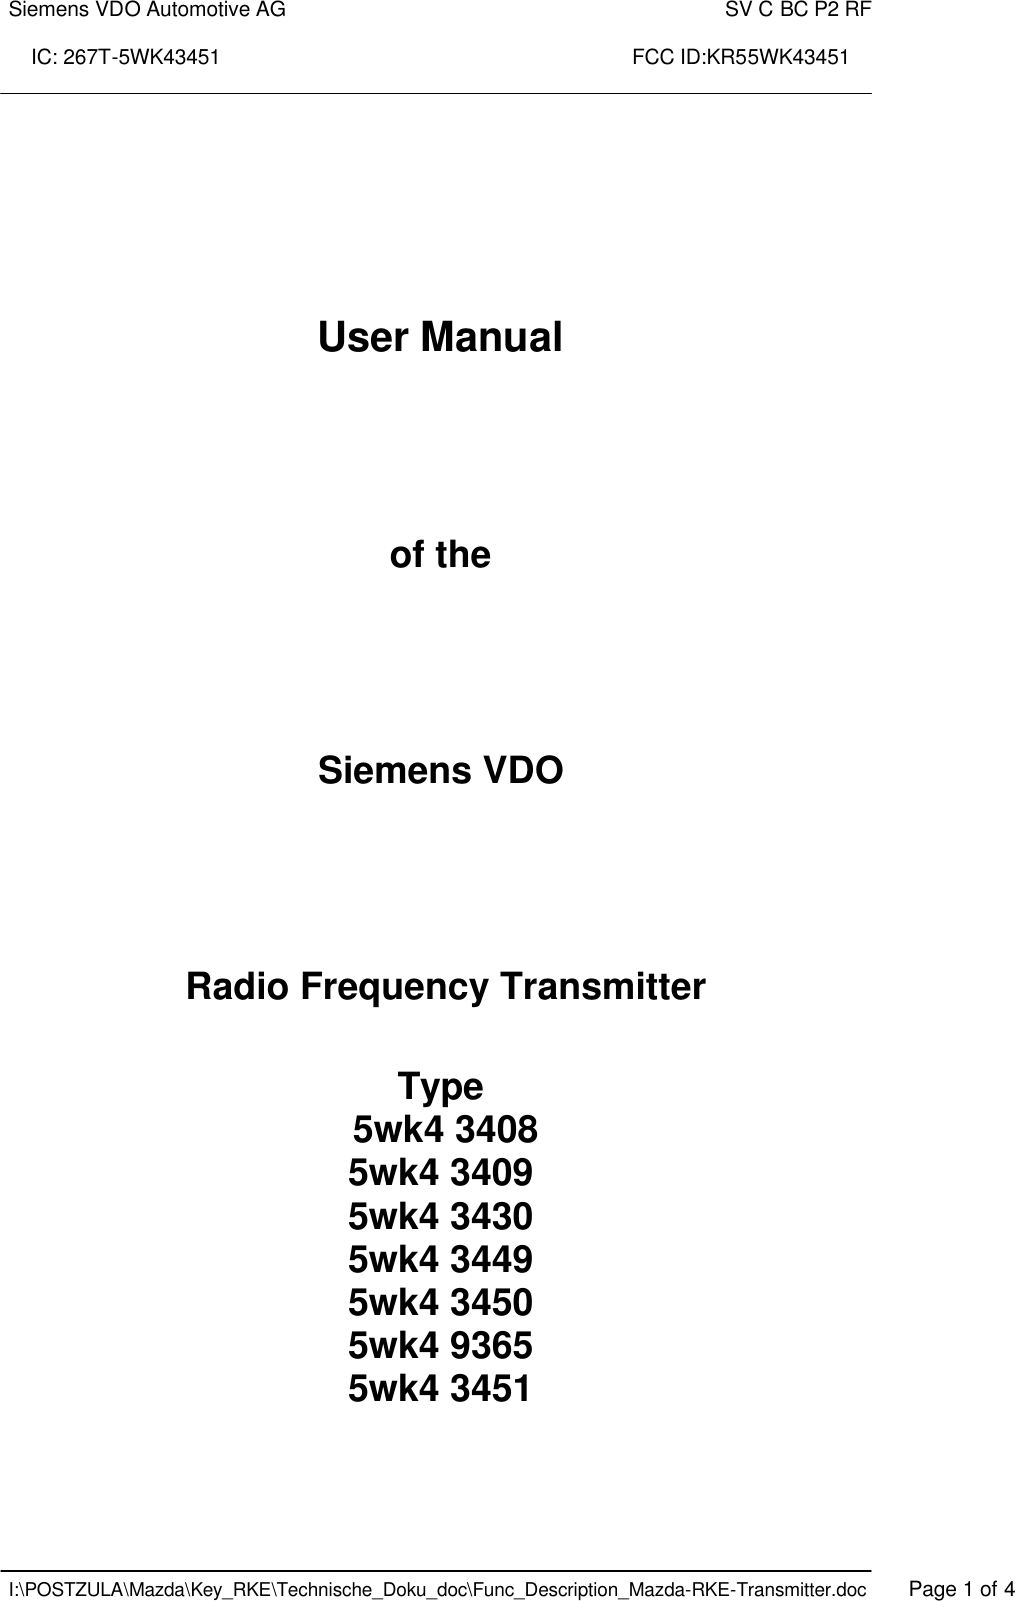 Siemens VDO Automotive AG    SV C BC P2 RF  IC: 267T-5WK43451                                                                       FCC ID:KR55WK43451    I:\POSTZULA\Mazda\Key_RKE\Technische_Doku_doc\Func_Description_Mazda-RKE-Transmitter.doc   Page 1 of 4     User Manual     of the     Siemens VDO     Radio Frequency Transmitter   Type  5wk4 3408 5wk4 3409 5wk4 3430 5wk4 3449 5wk4 3450 5wk4 9365 5wk4 3451     